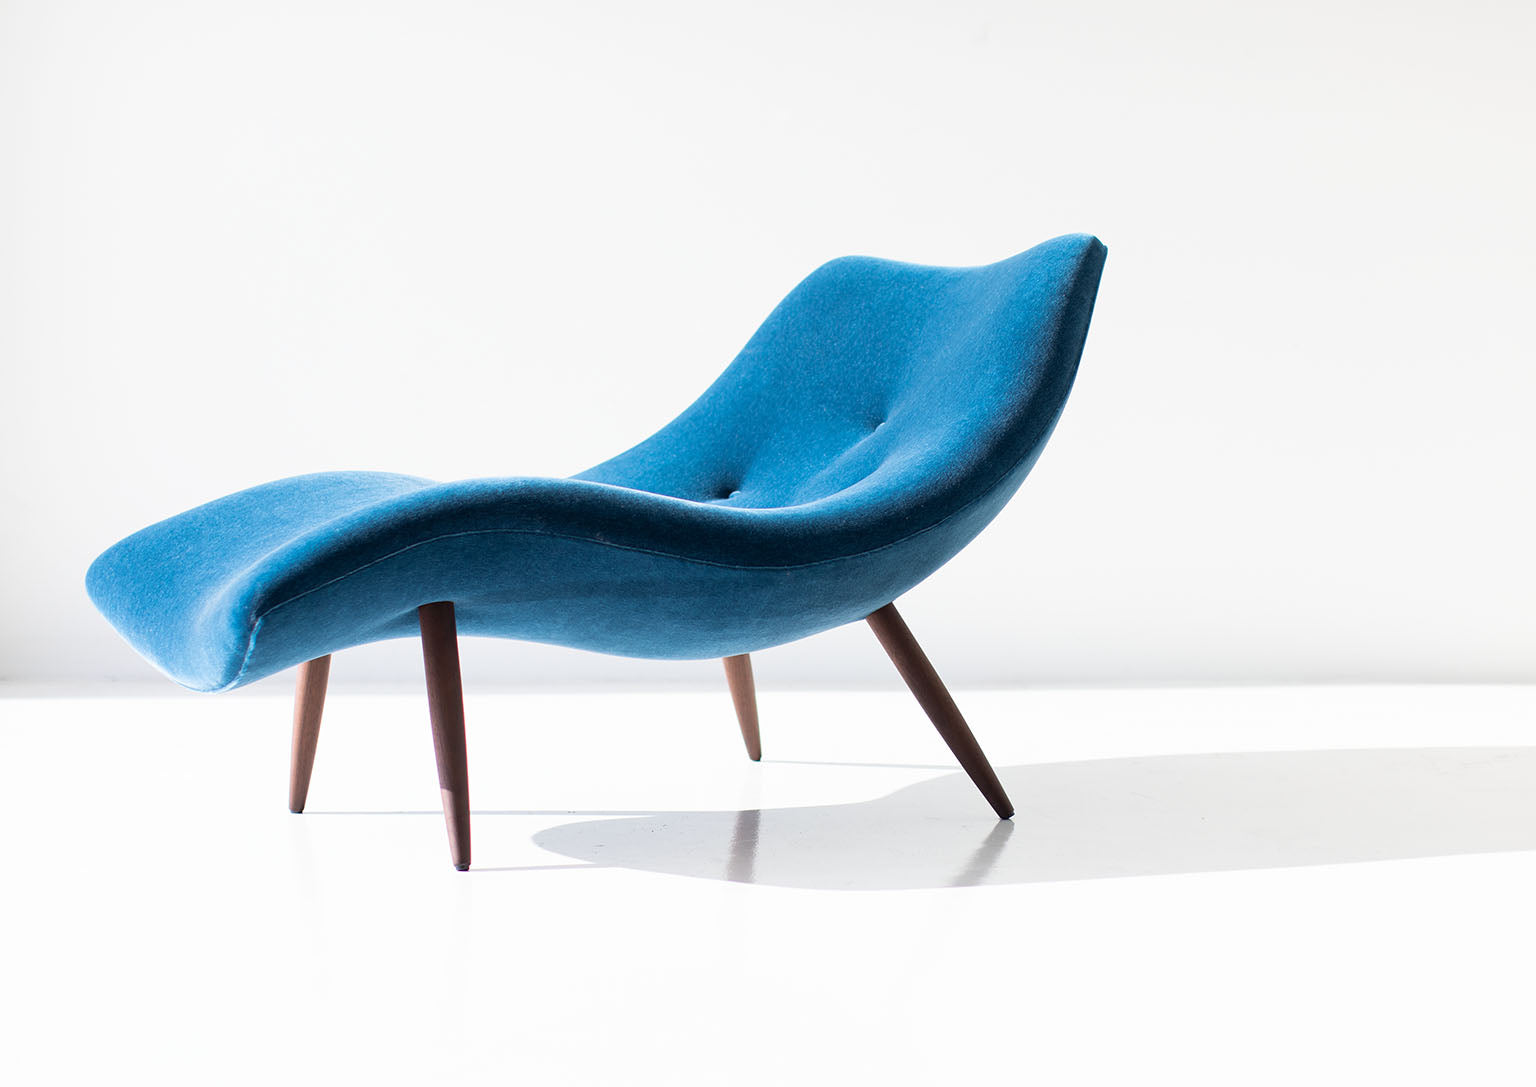      craft-modern-chaise-lounge-1704-01